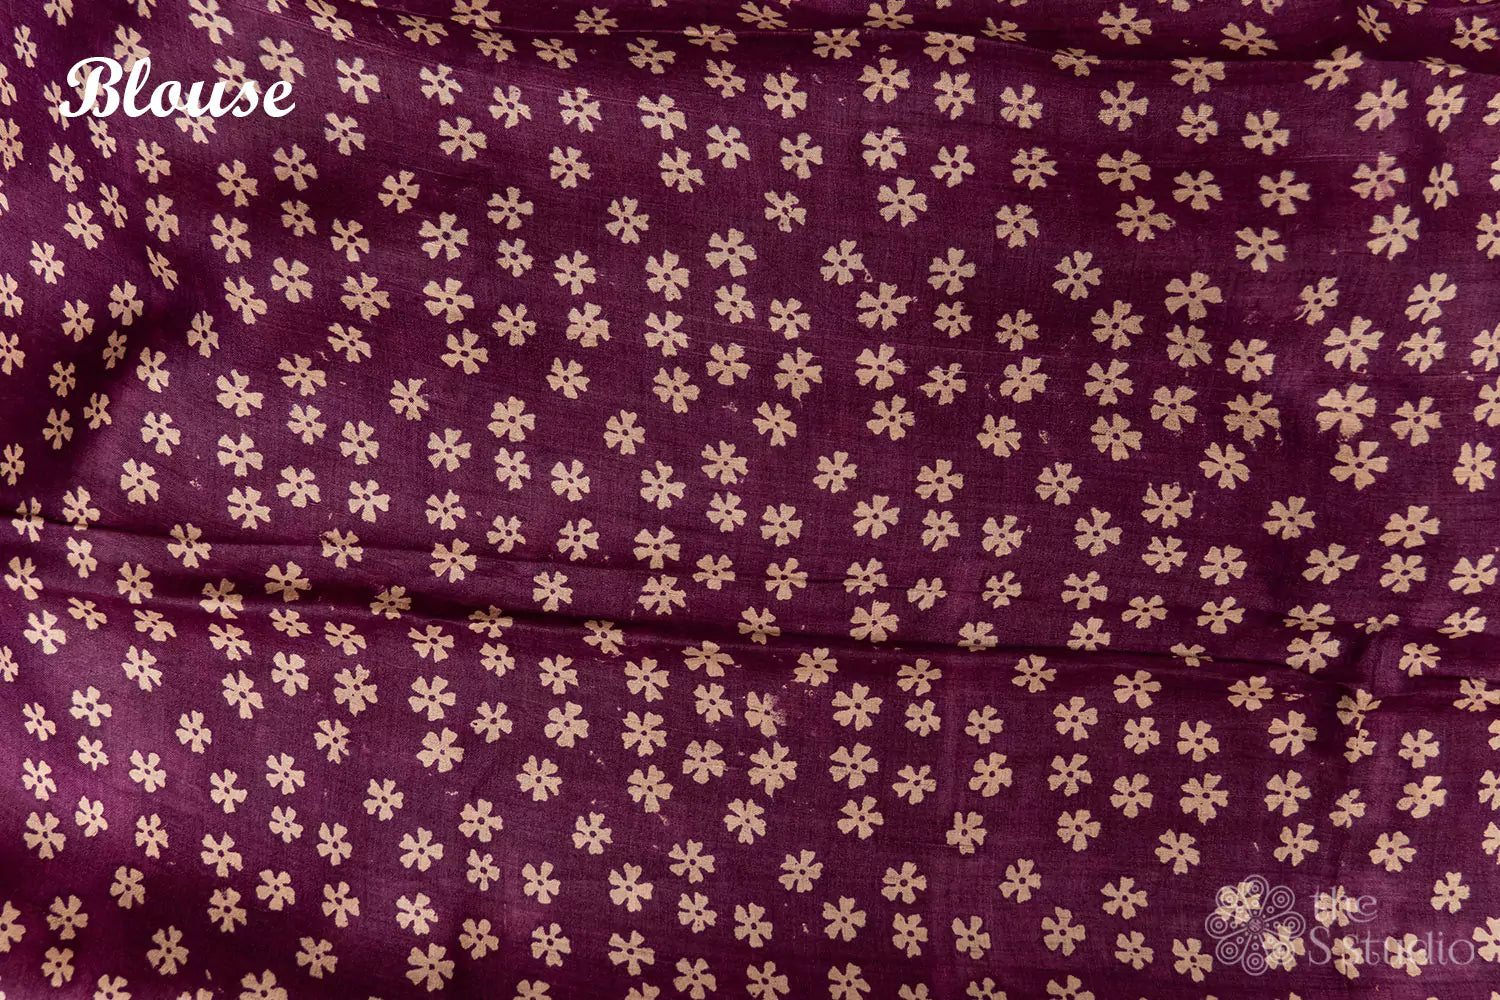 Grey tussar silk saree with purple floral printed border